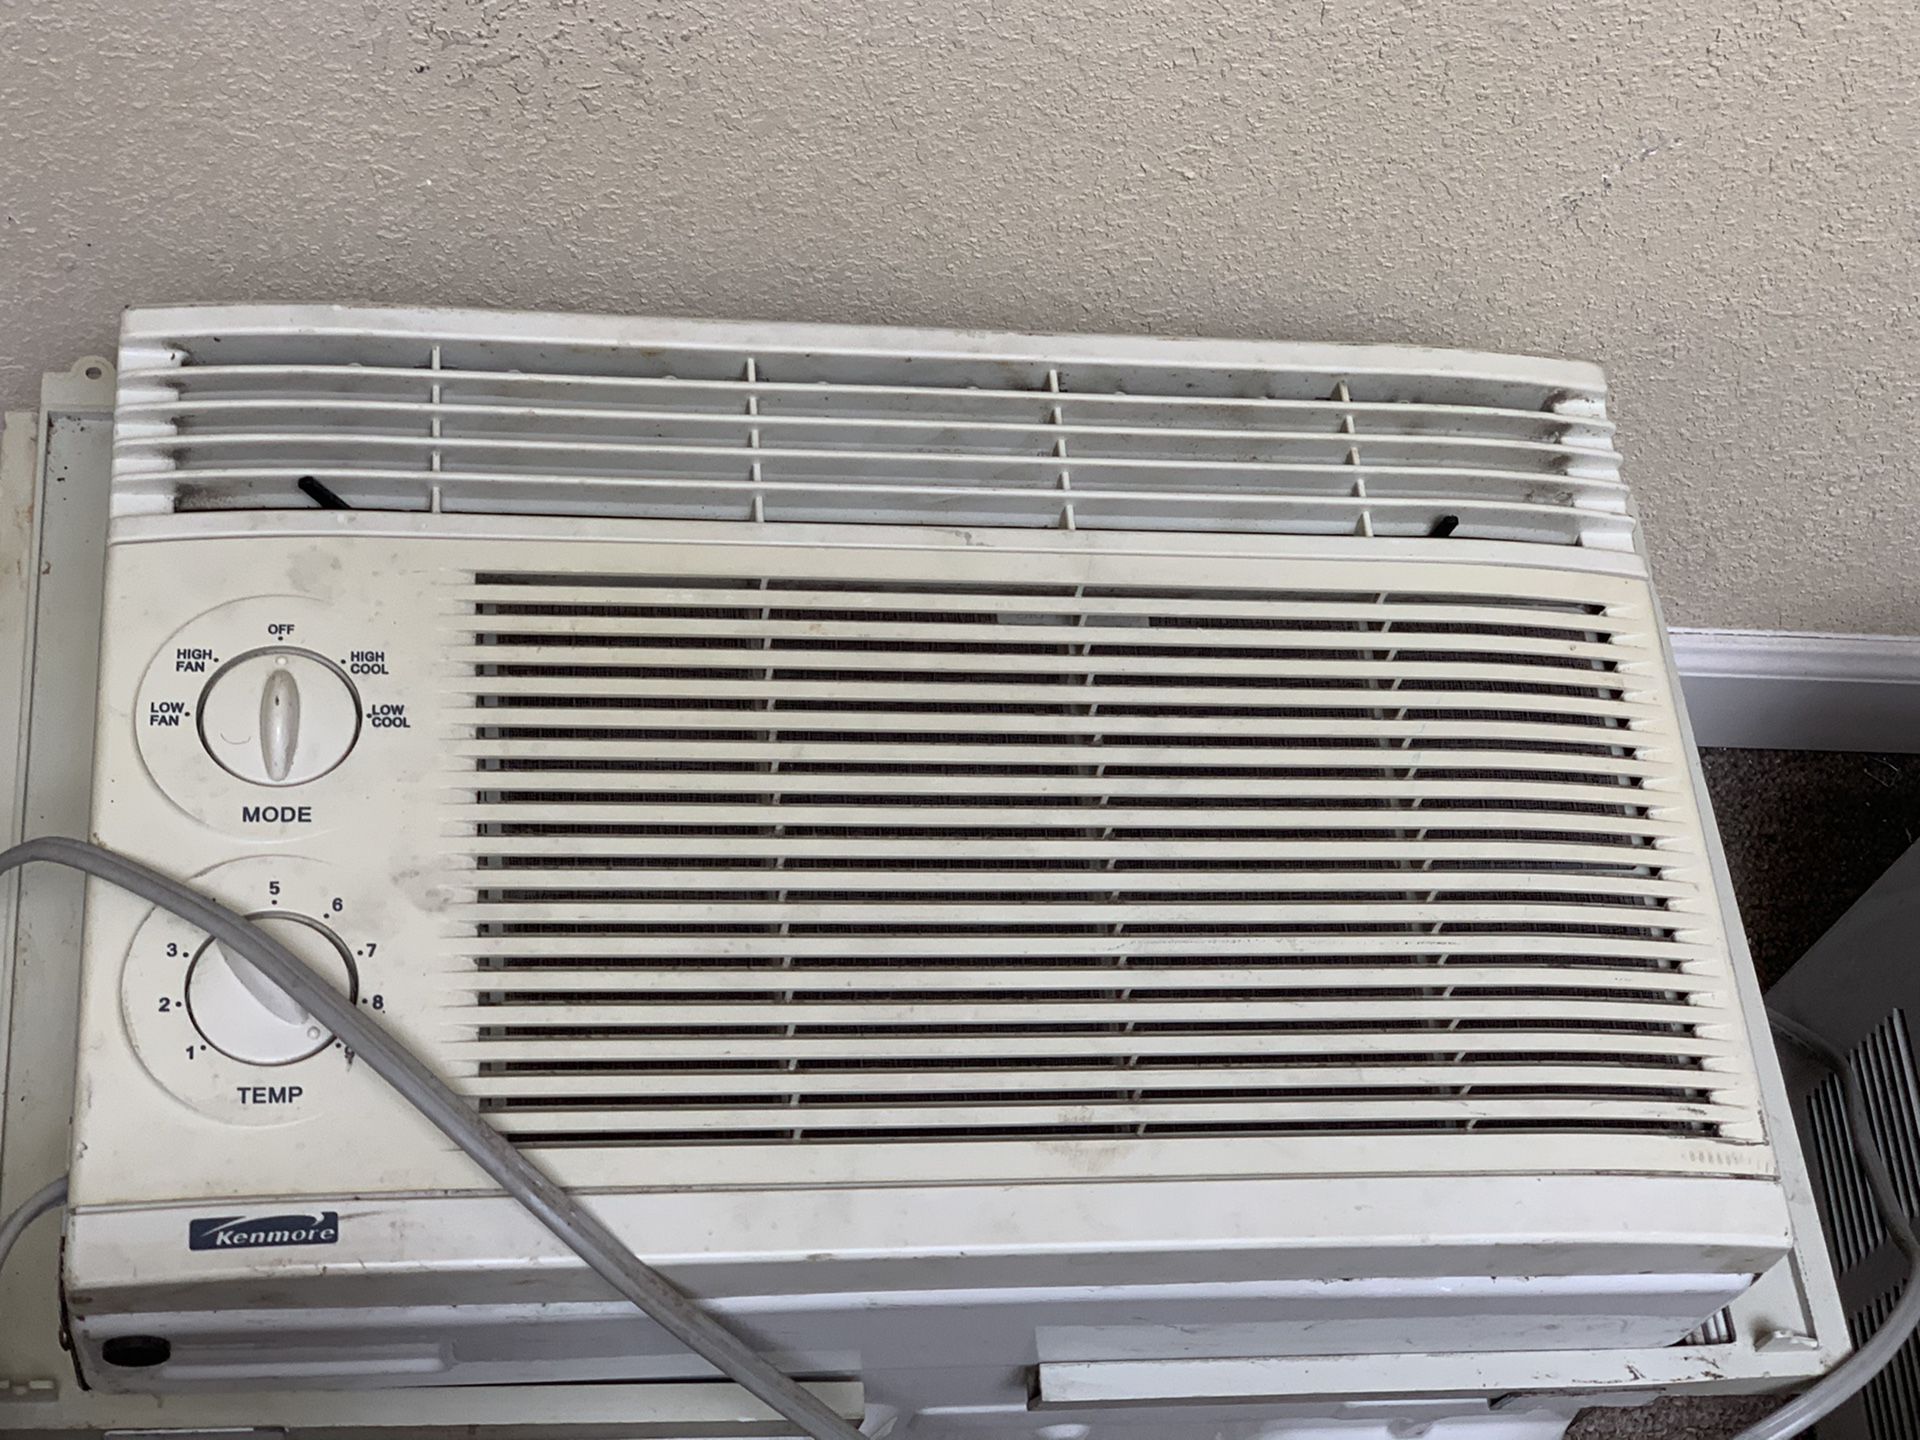 LG Window Air Conditioner & Kenmore Air Conditioner